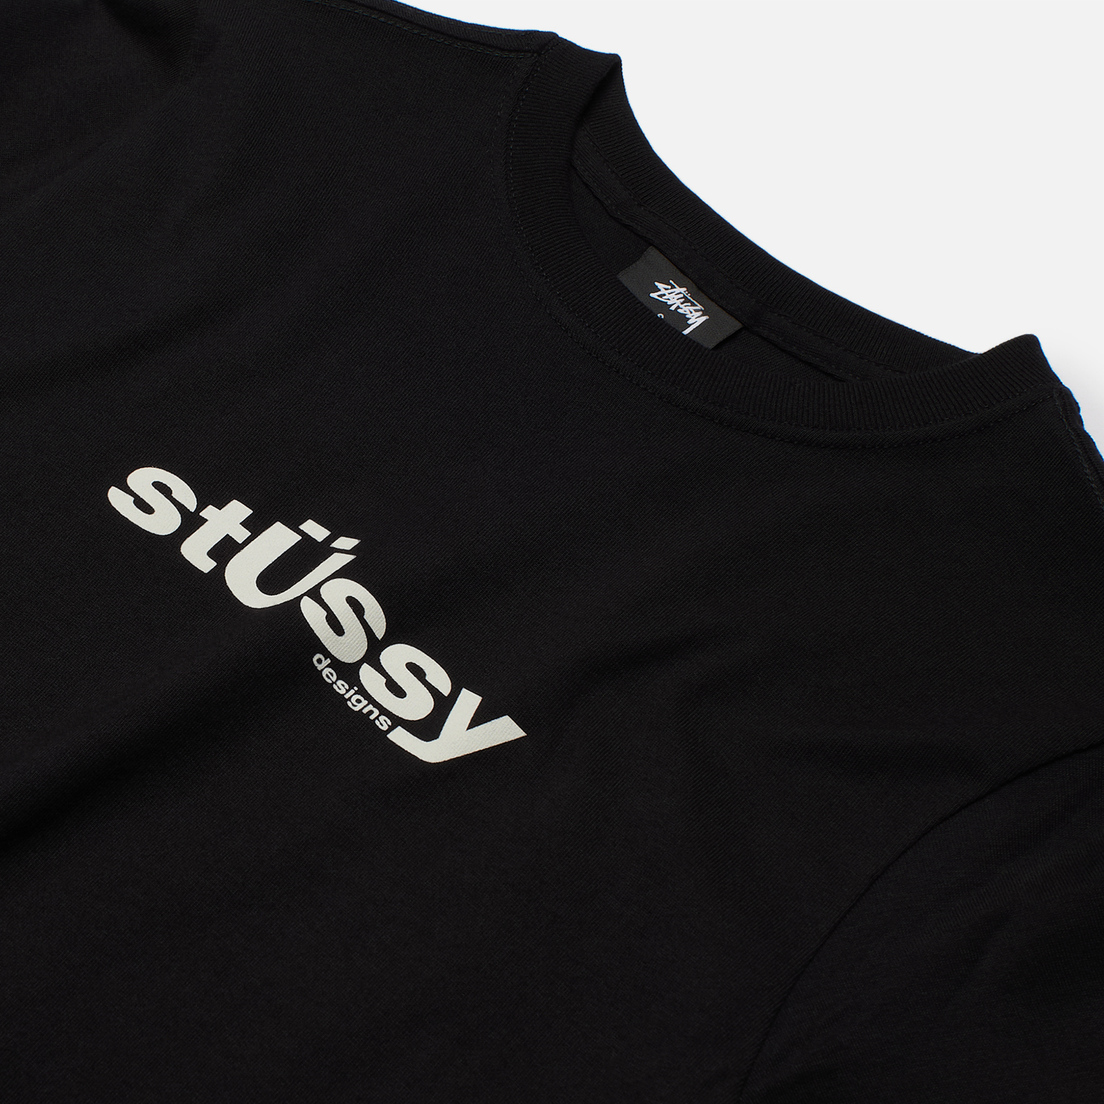 Stussy Женская футболка Big U